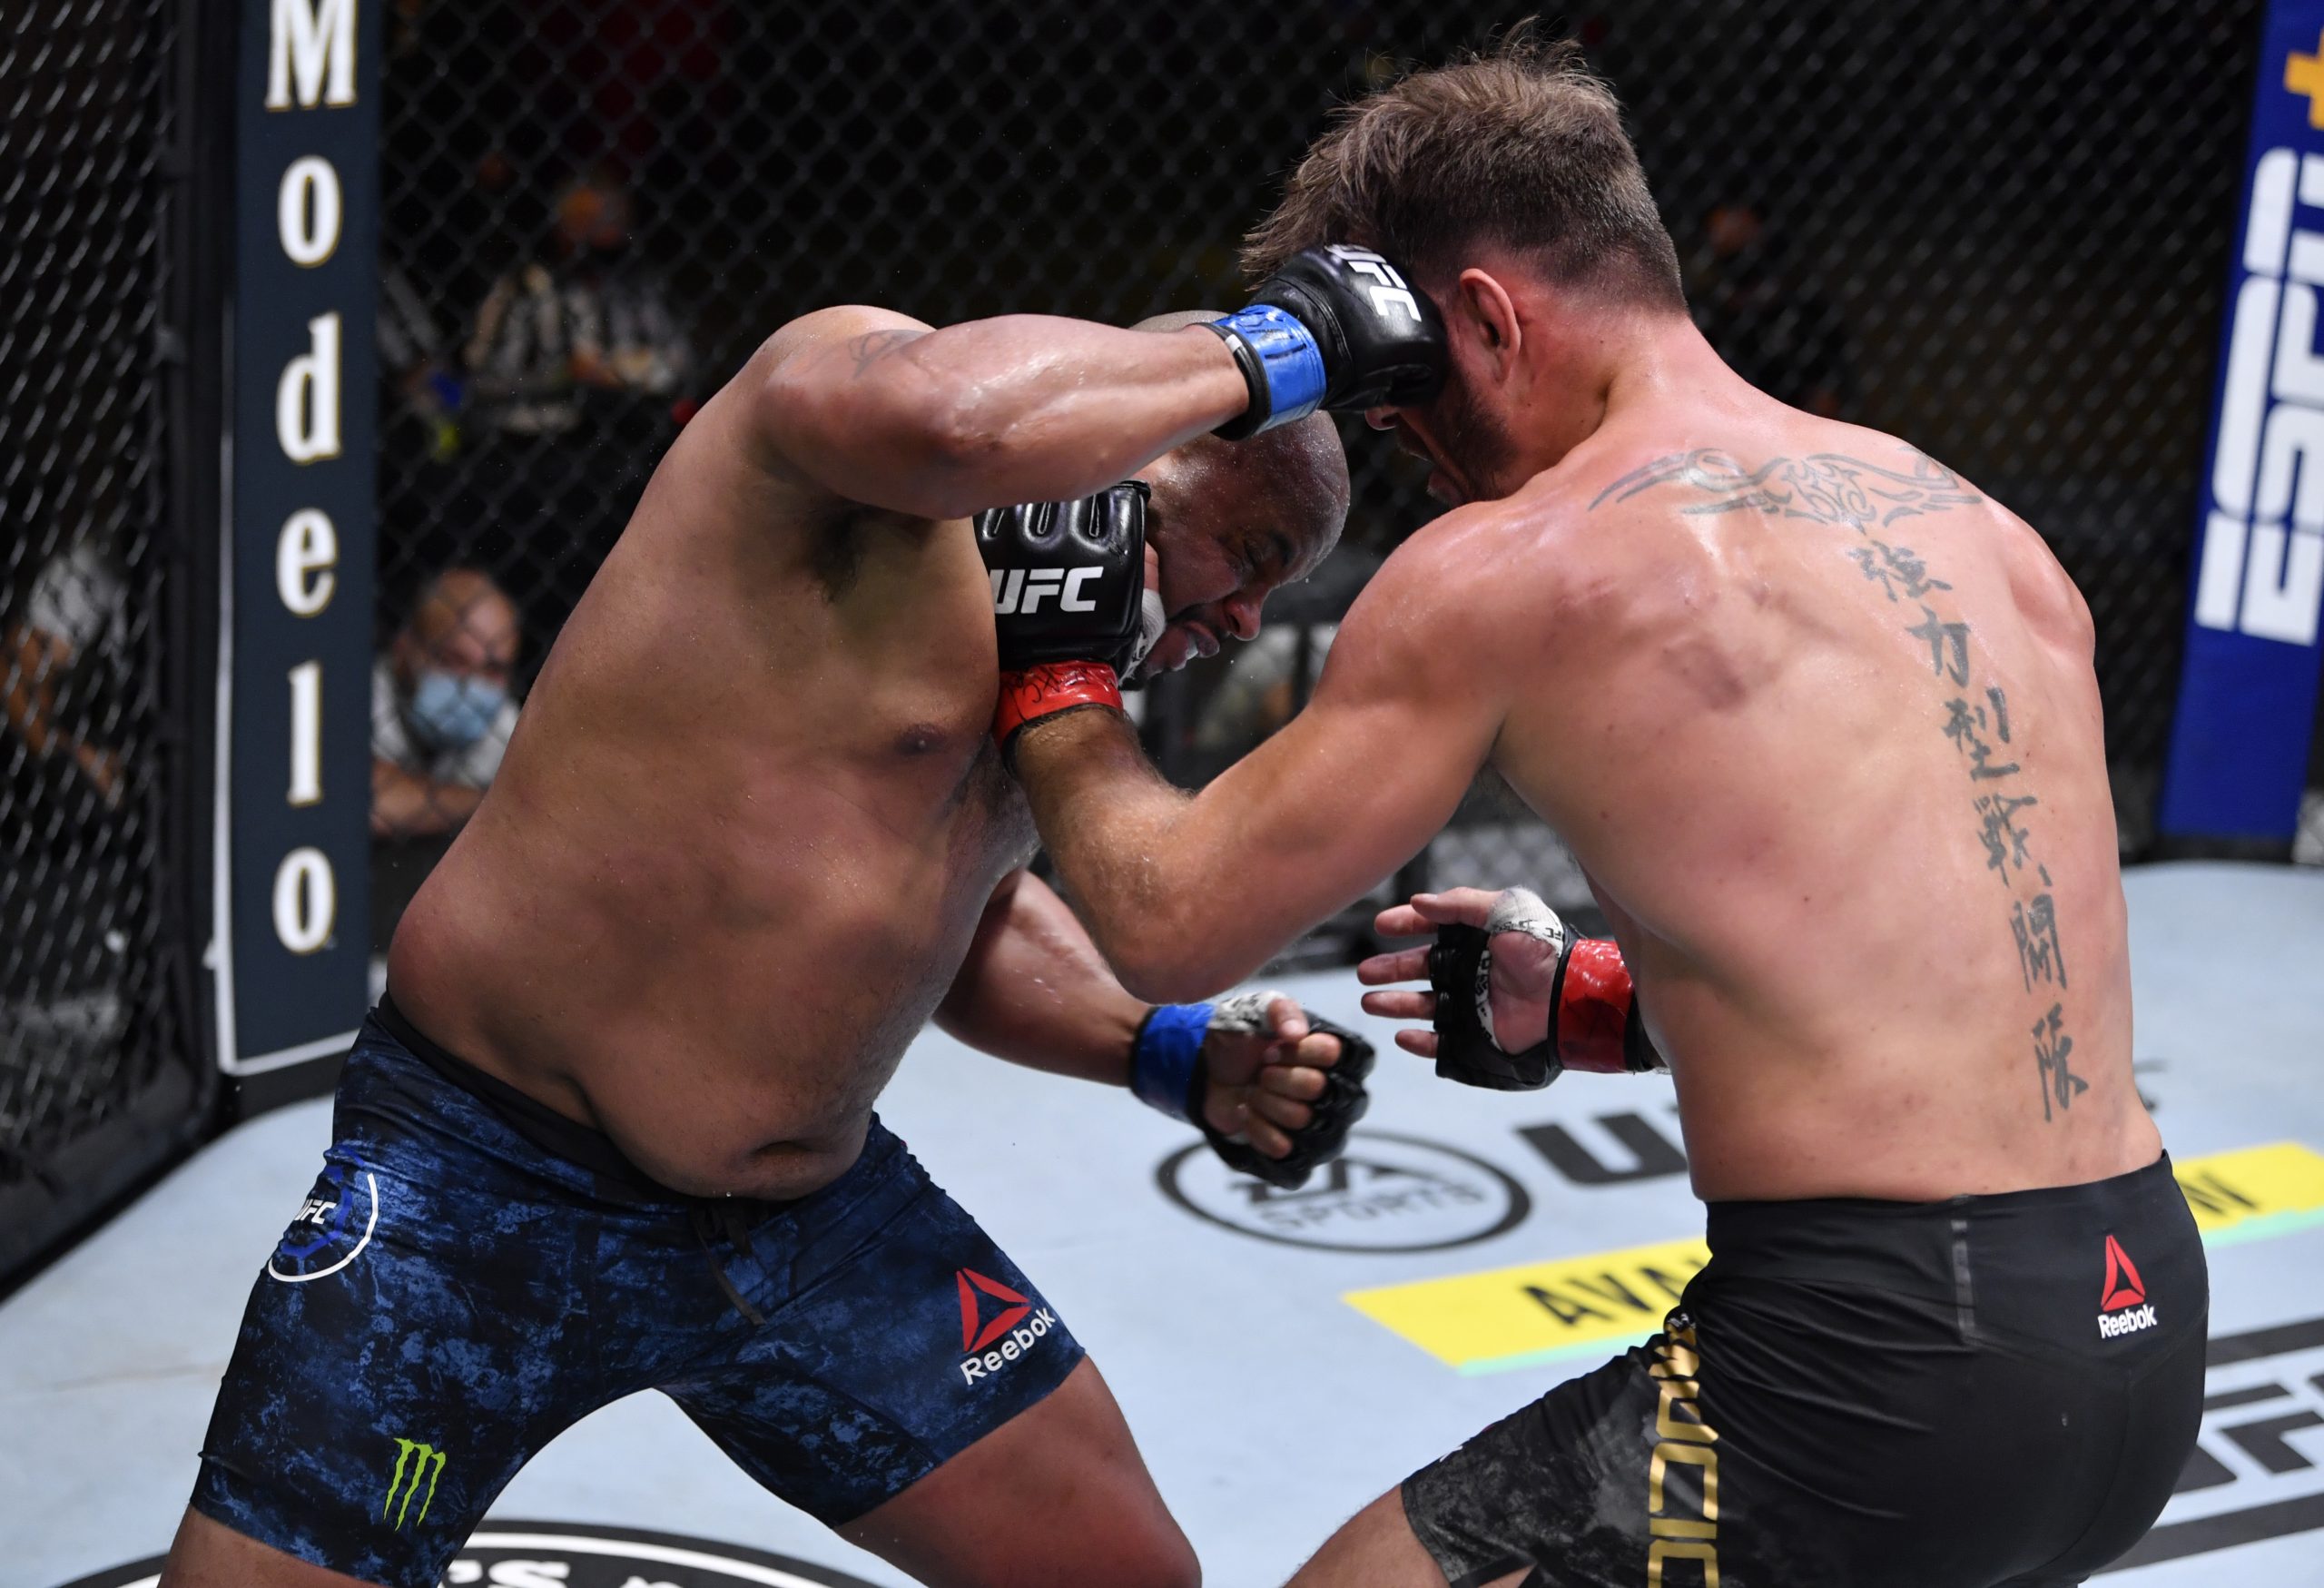 Daniel Cormier vs Stipe Miocic was the main event at UFC 252